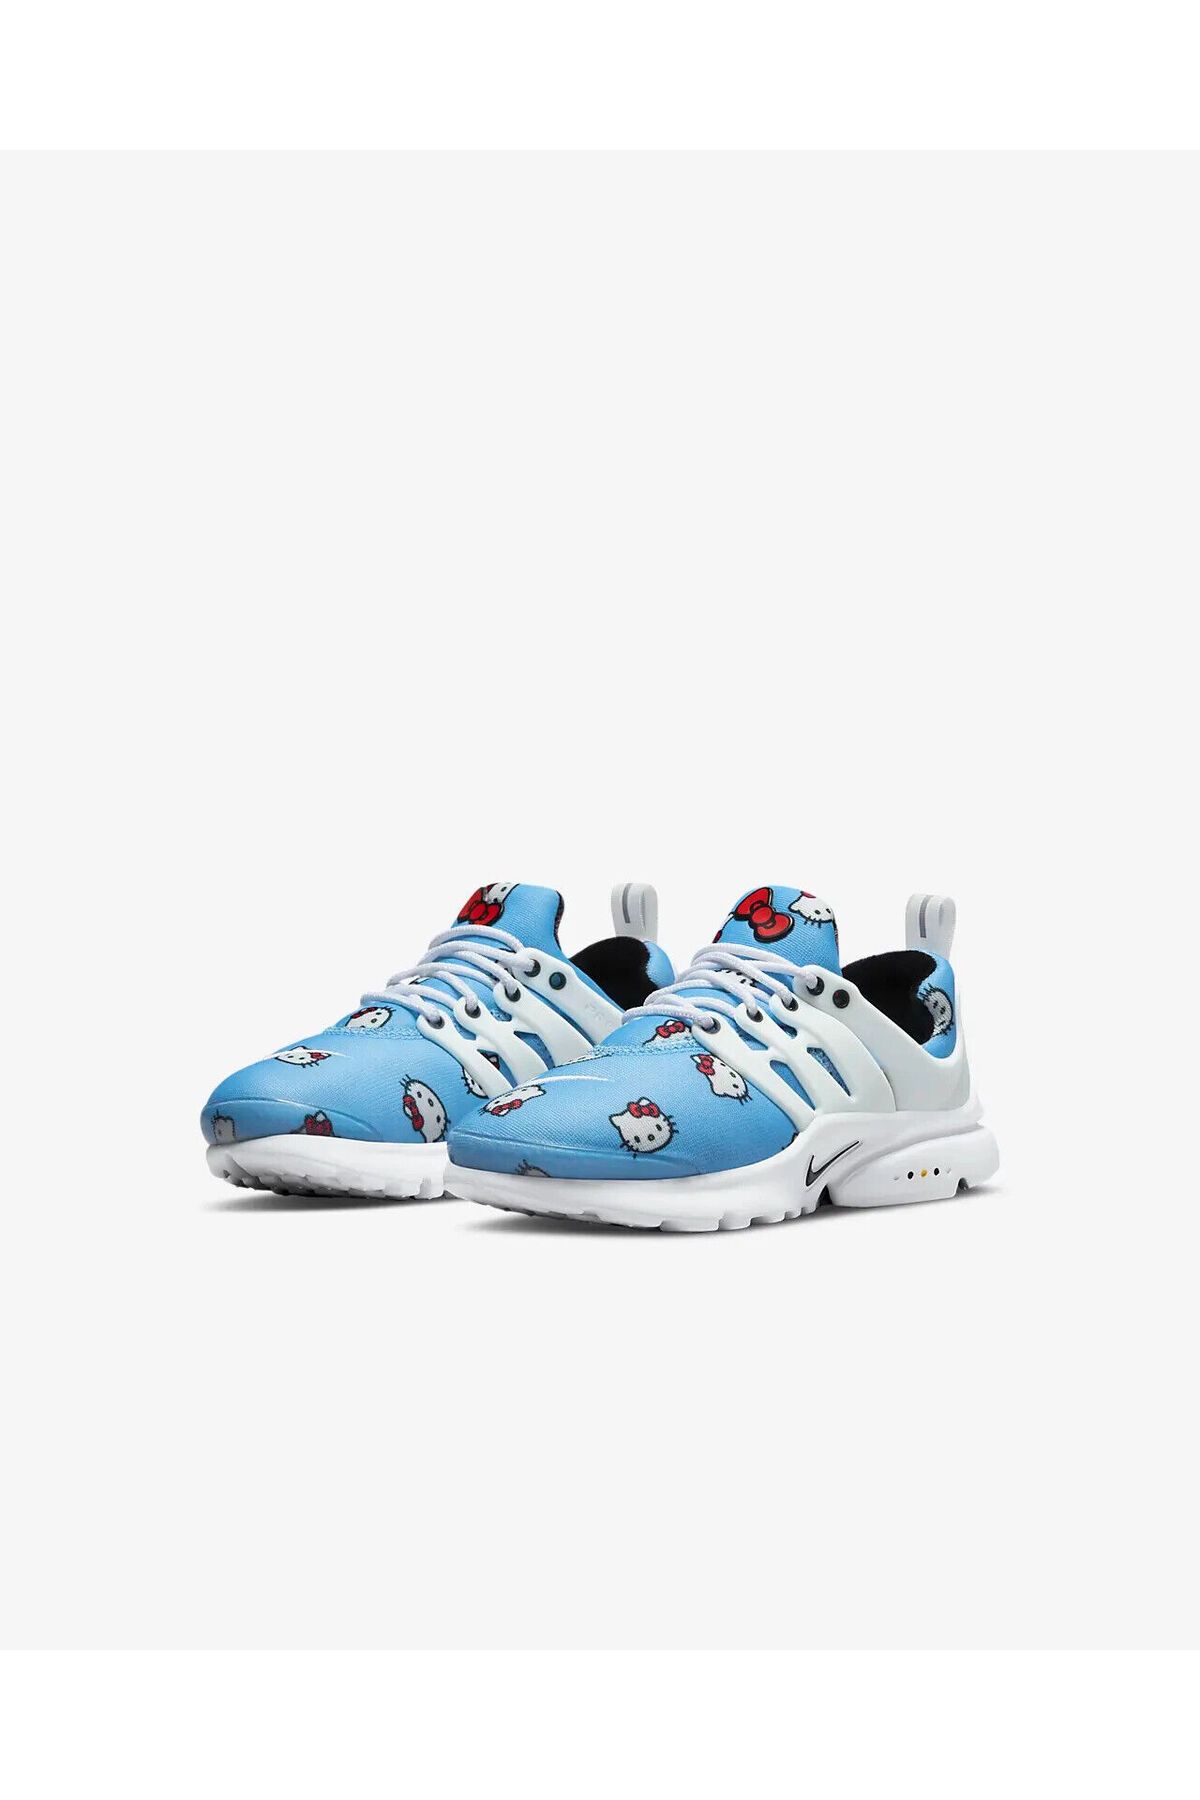 Nike Presto QS x Hello Kitty Kids Shoes Sneakers Blue DH7780-402